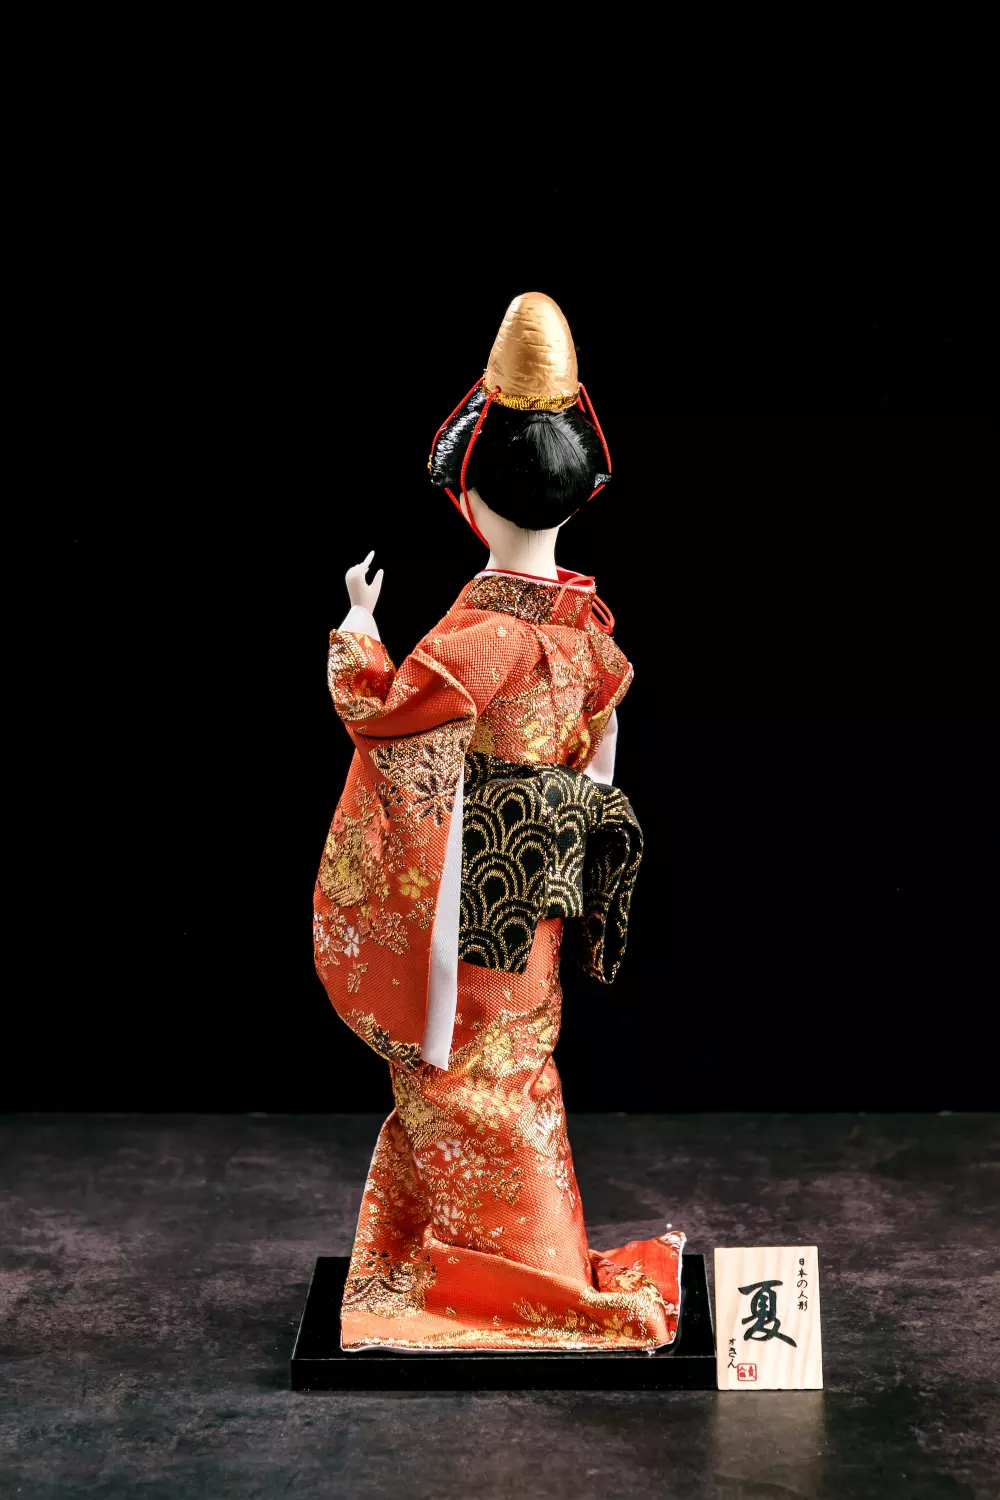 Vintage Geisha Doll | Japanese Geisha Doll Sculpture With Red 